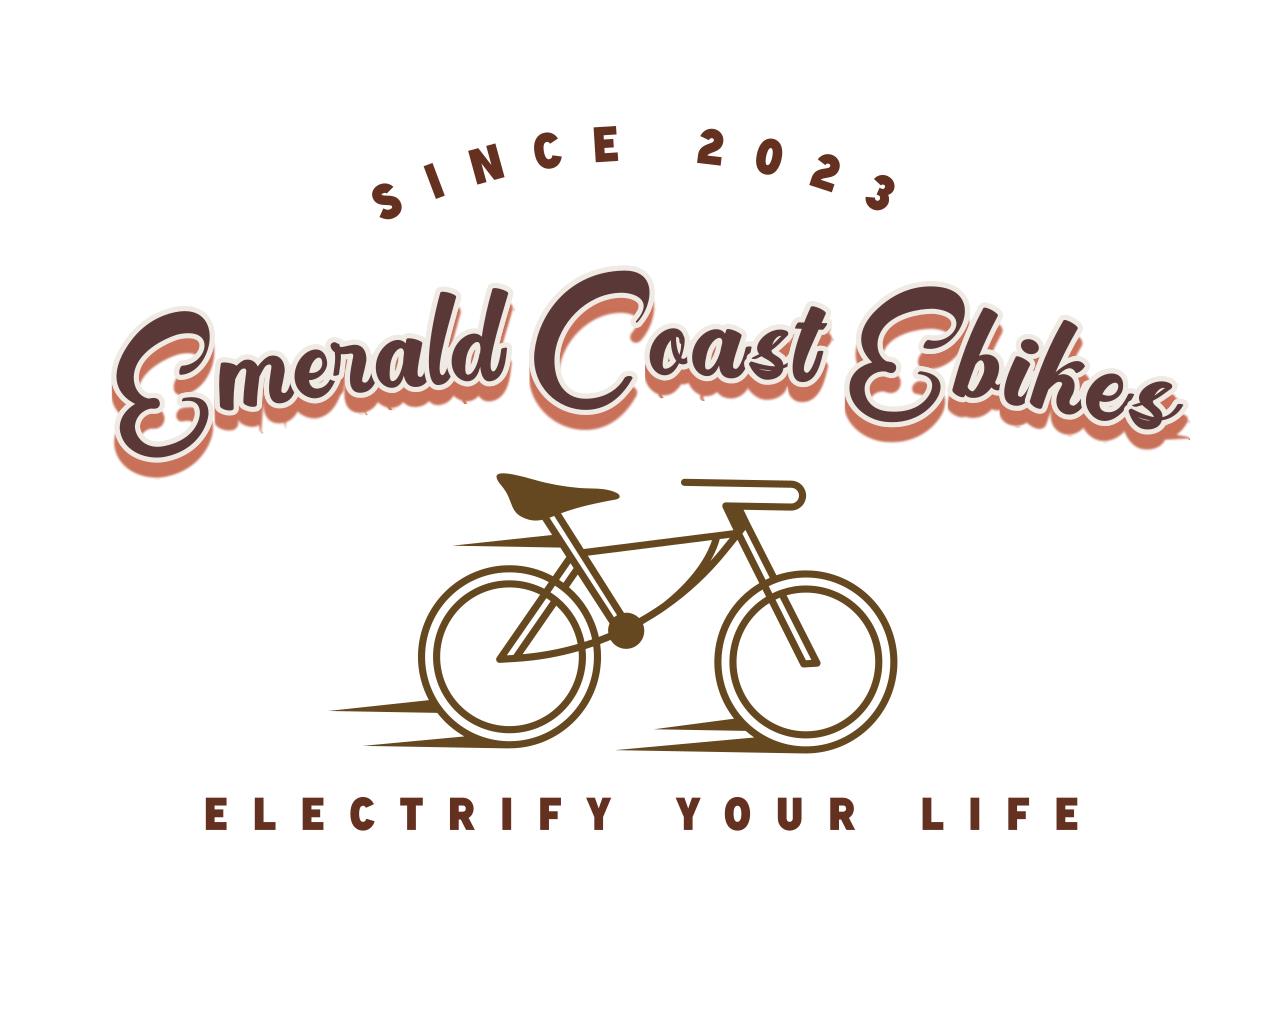 Emerald Coast ebikes logo